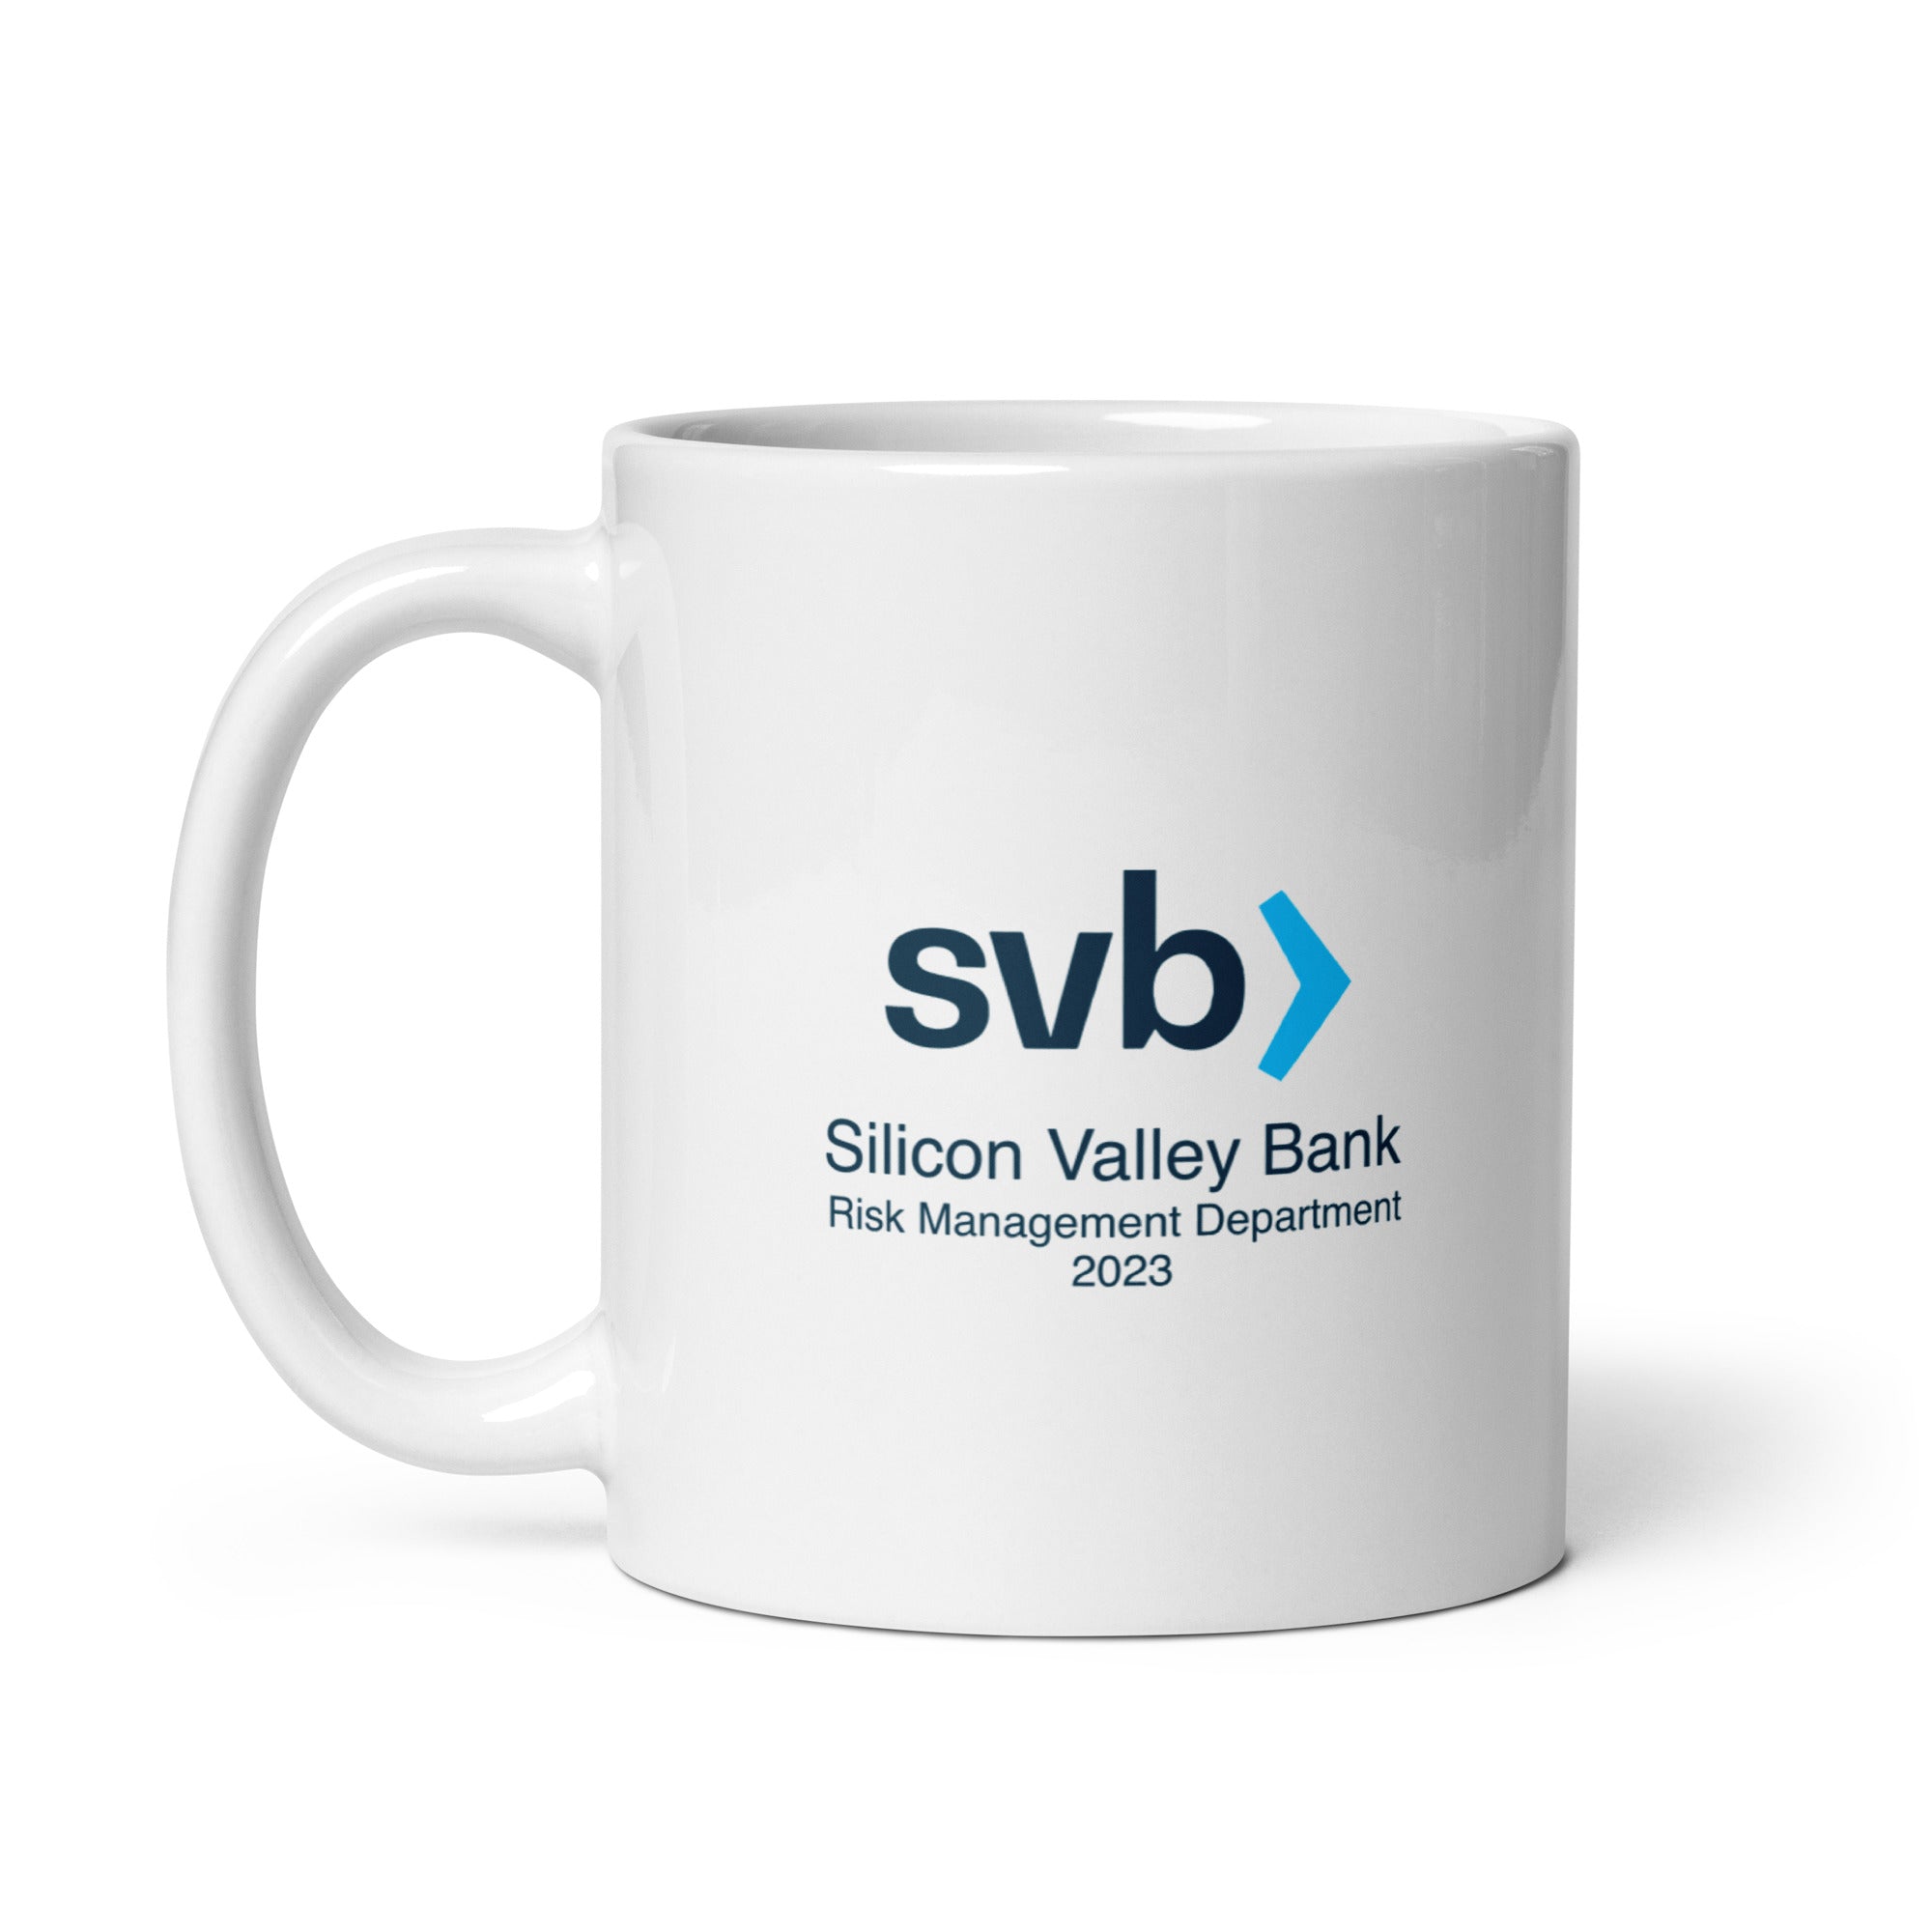 Silicon Valley Bank Risk Management Department 2023 Mug